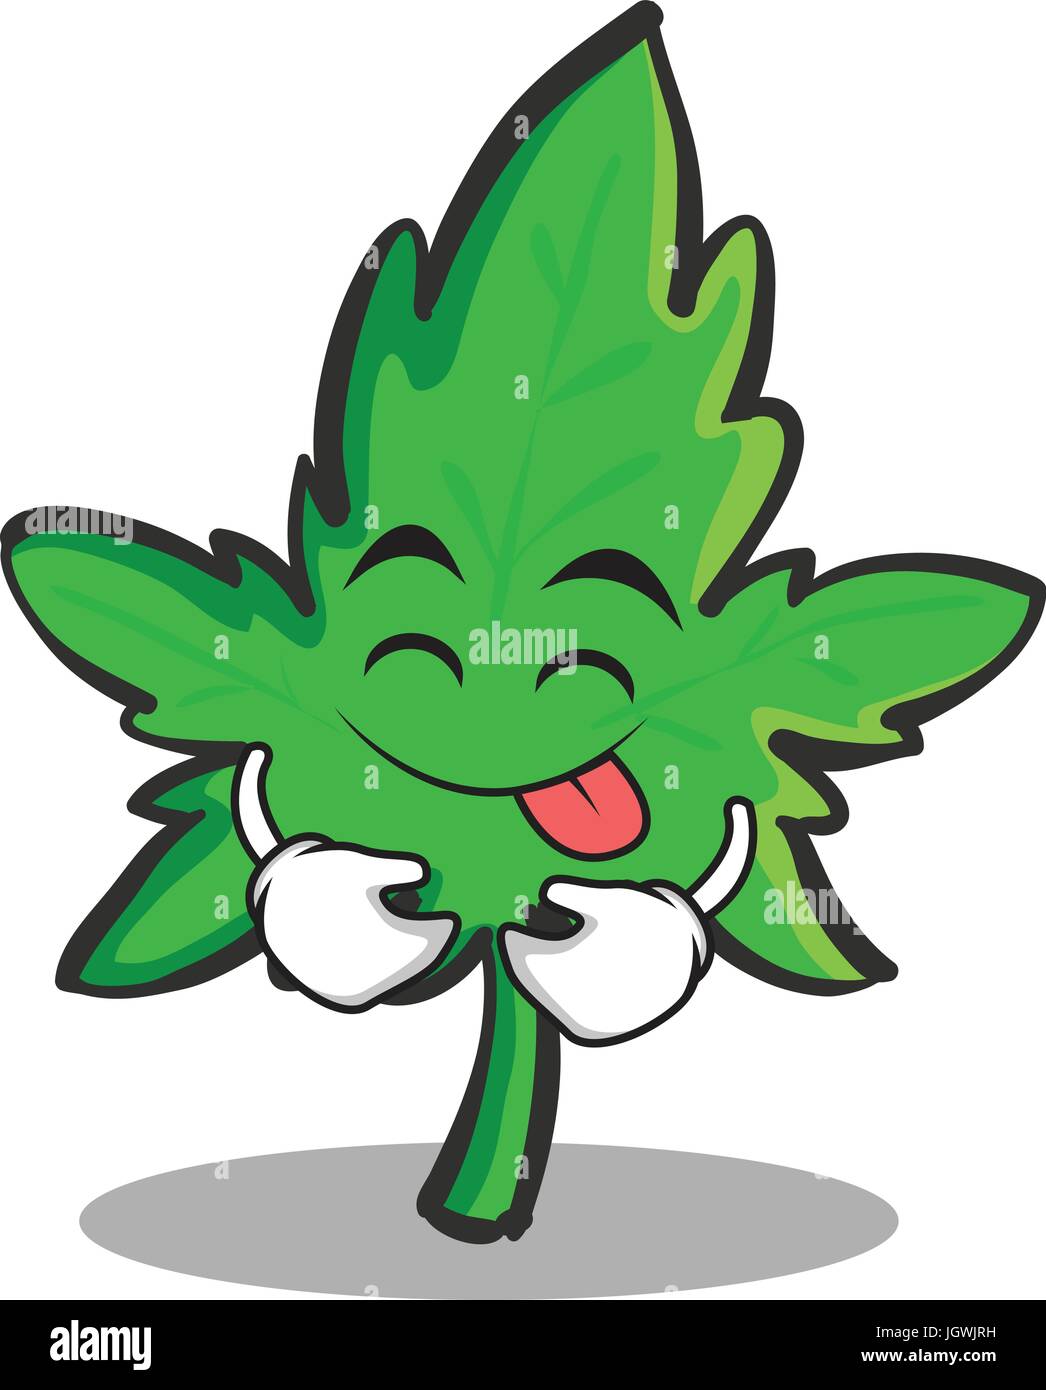 Tongue out face marijuana character cartoon Stock Vector Image & Art ...